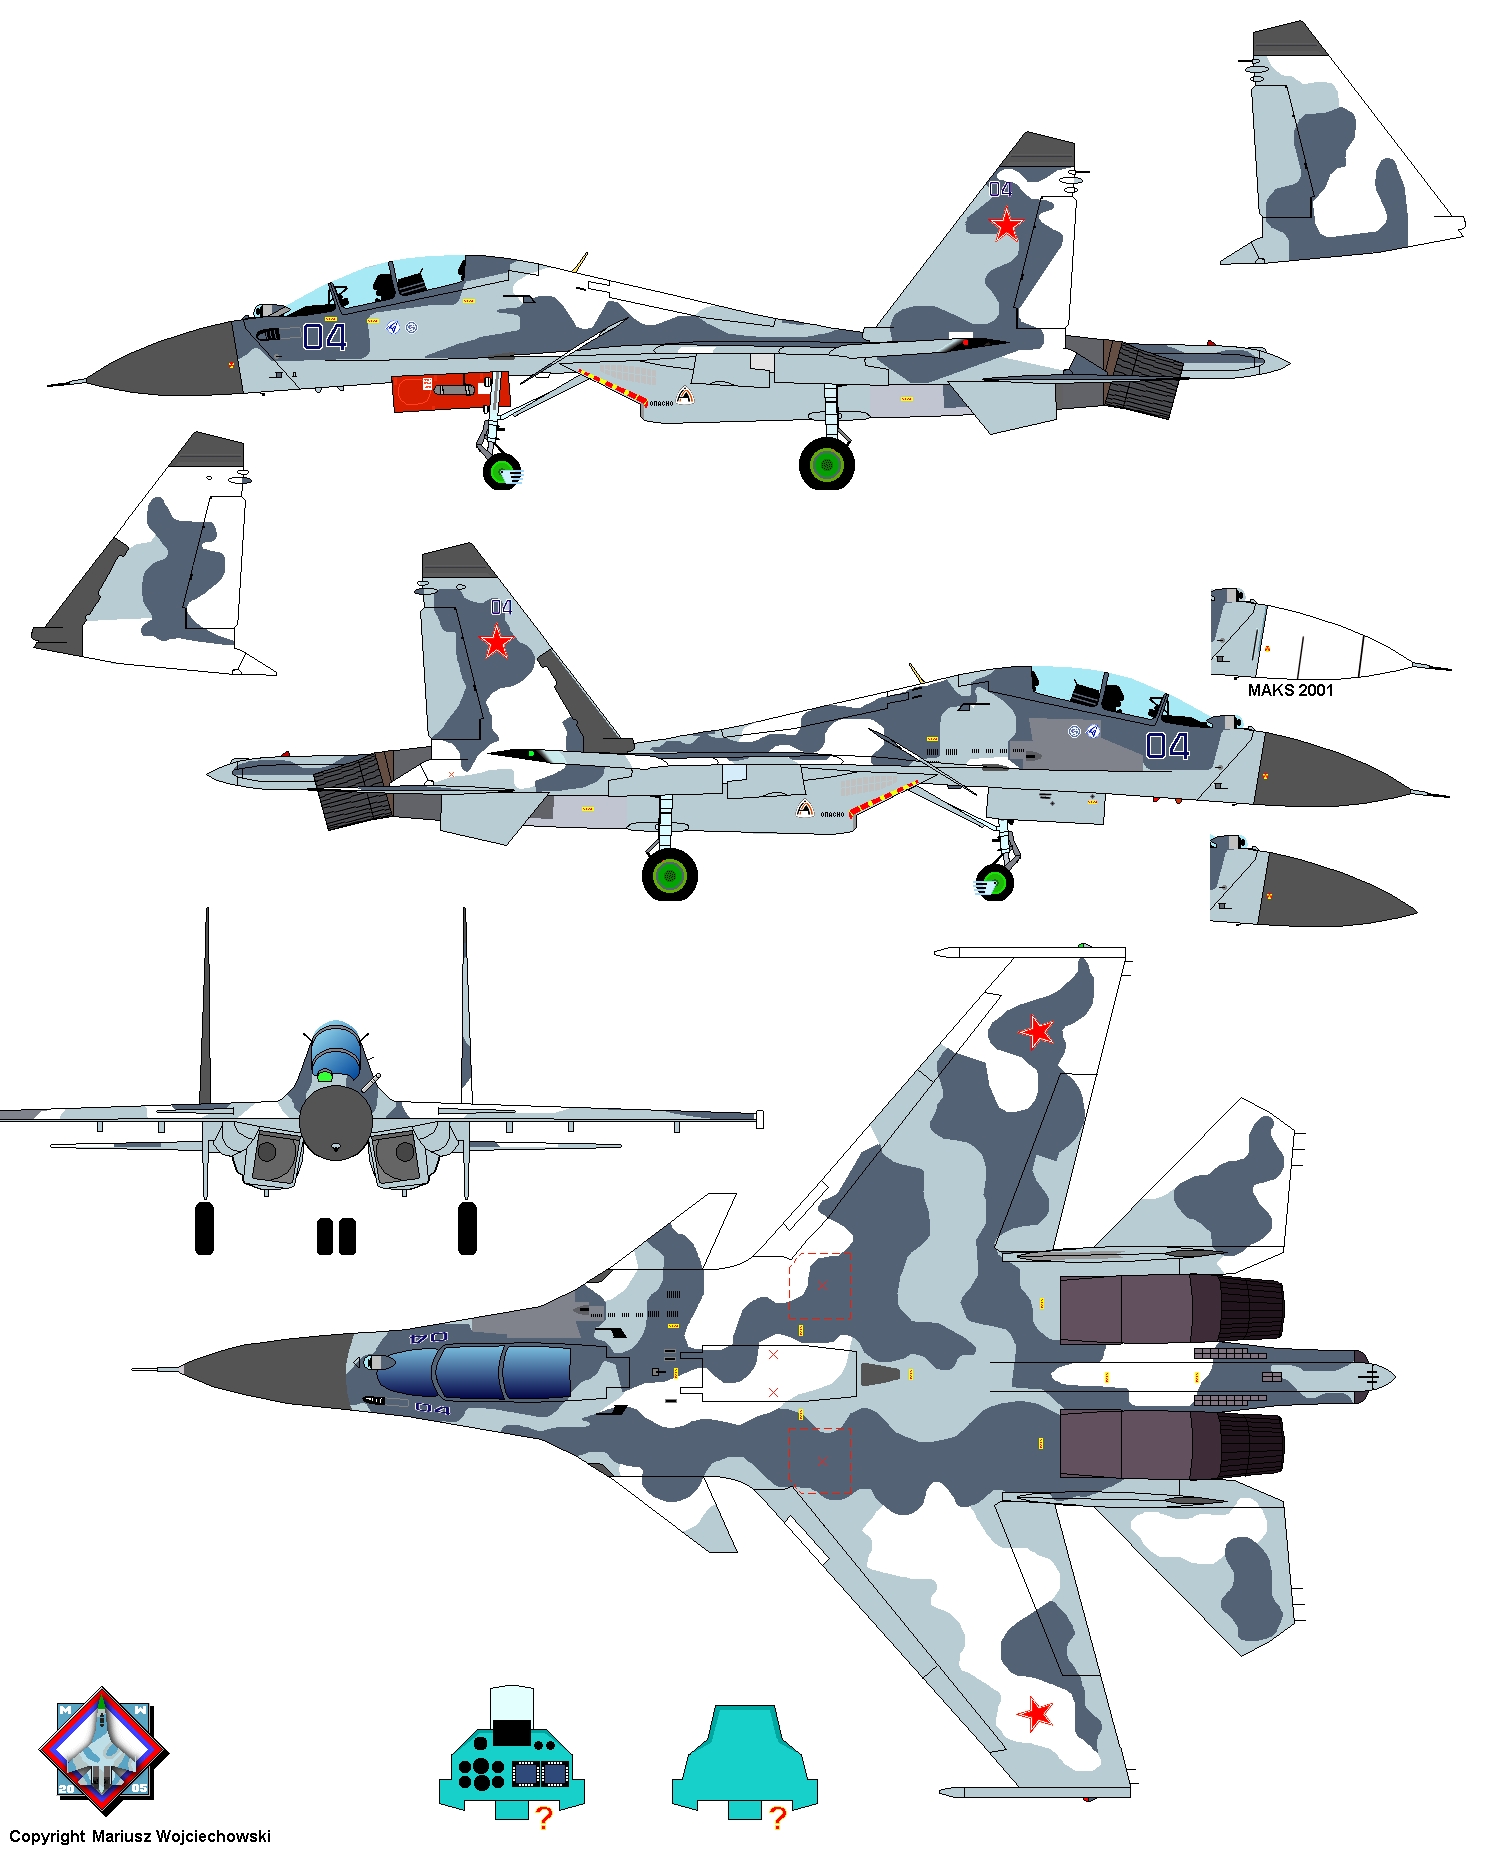 Amazing Sukhoi Su-30 Pictures & Backgrounds